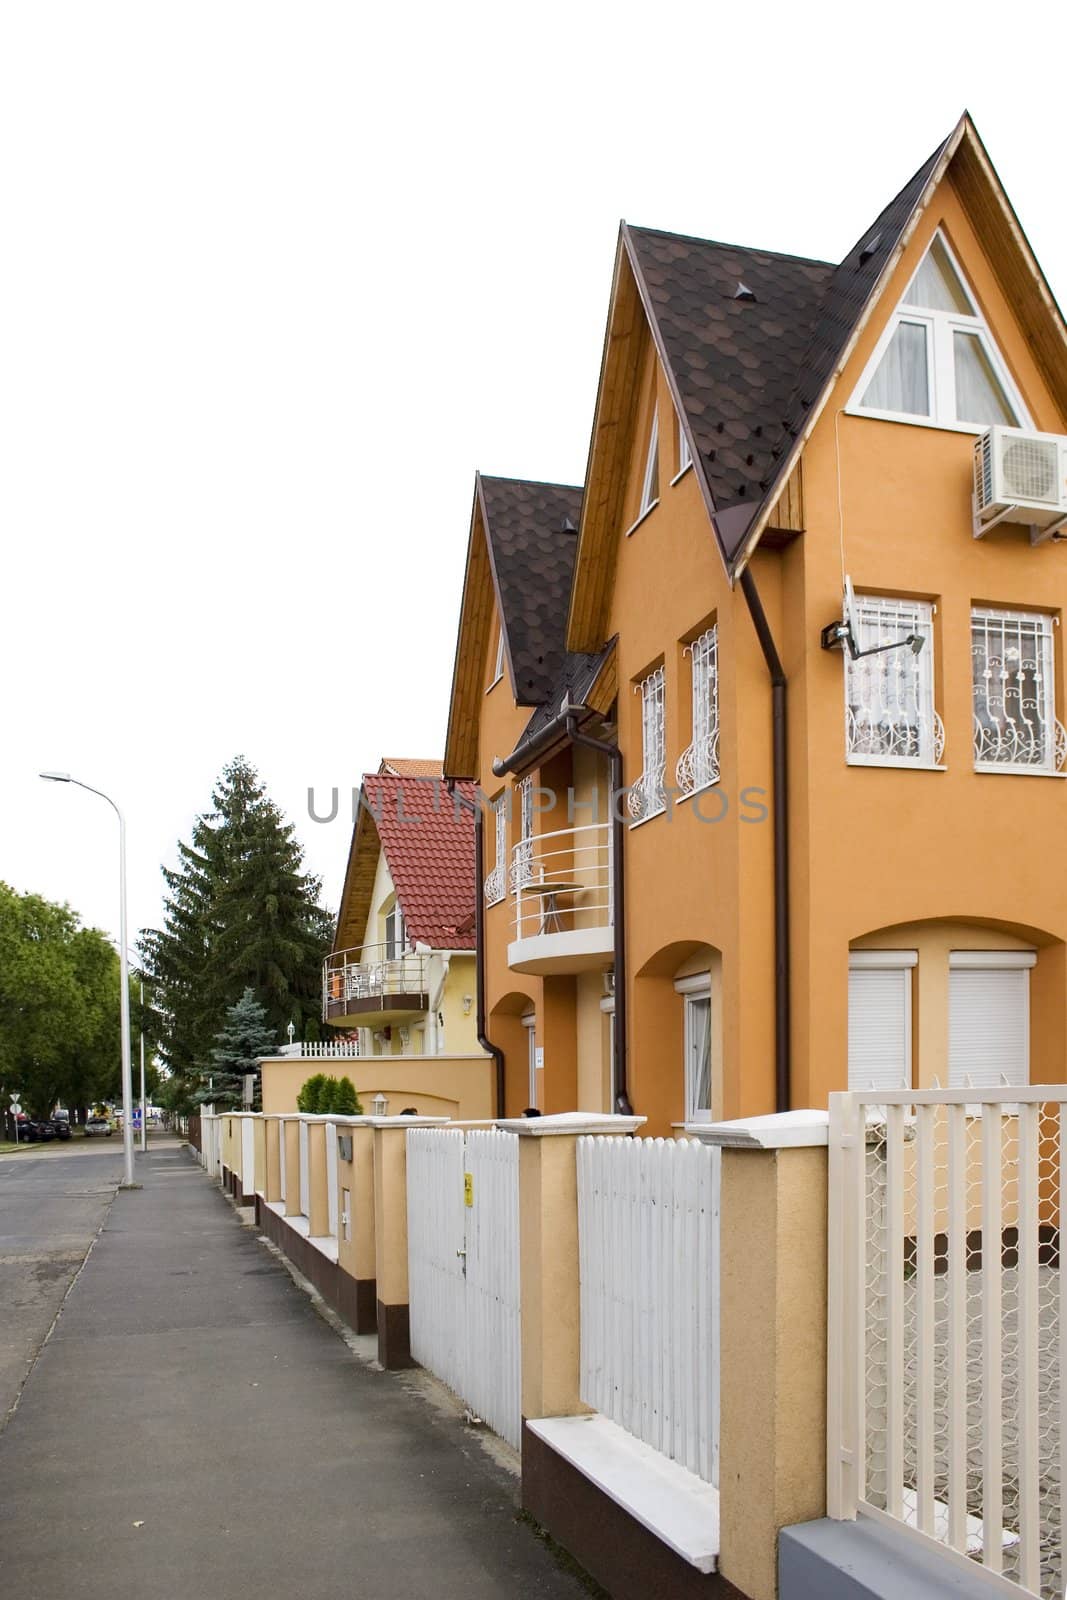 A typical urban house and street. Hajduszoboszlo, Hungary

